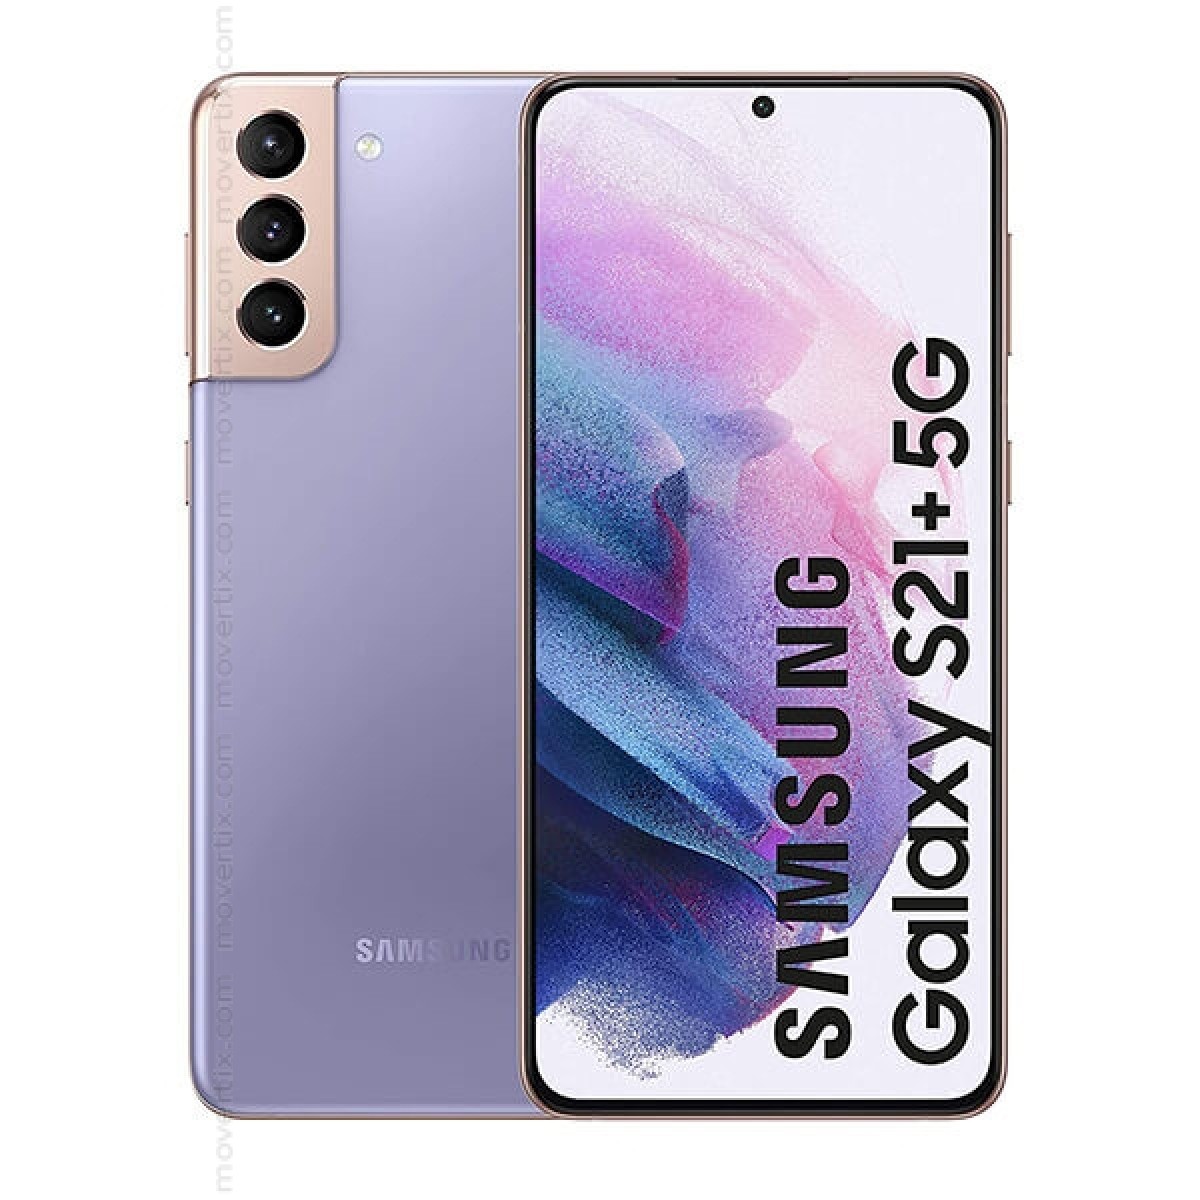 Samsung Galaxy S21+ 5G Phantom Violet 128GB and 8GB RAM - SM-G996B